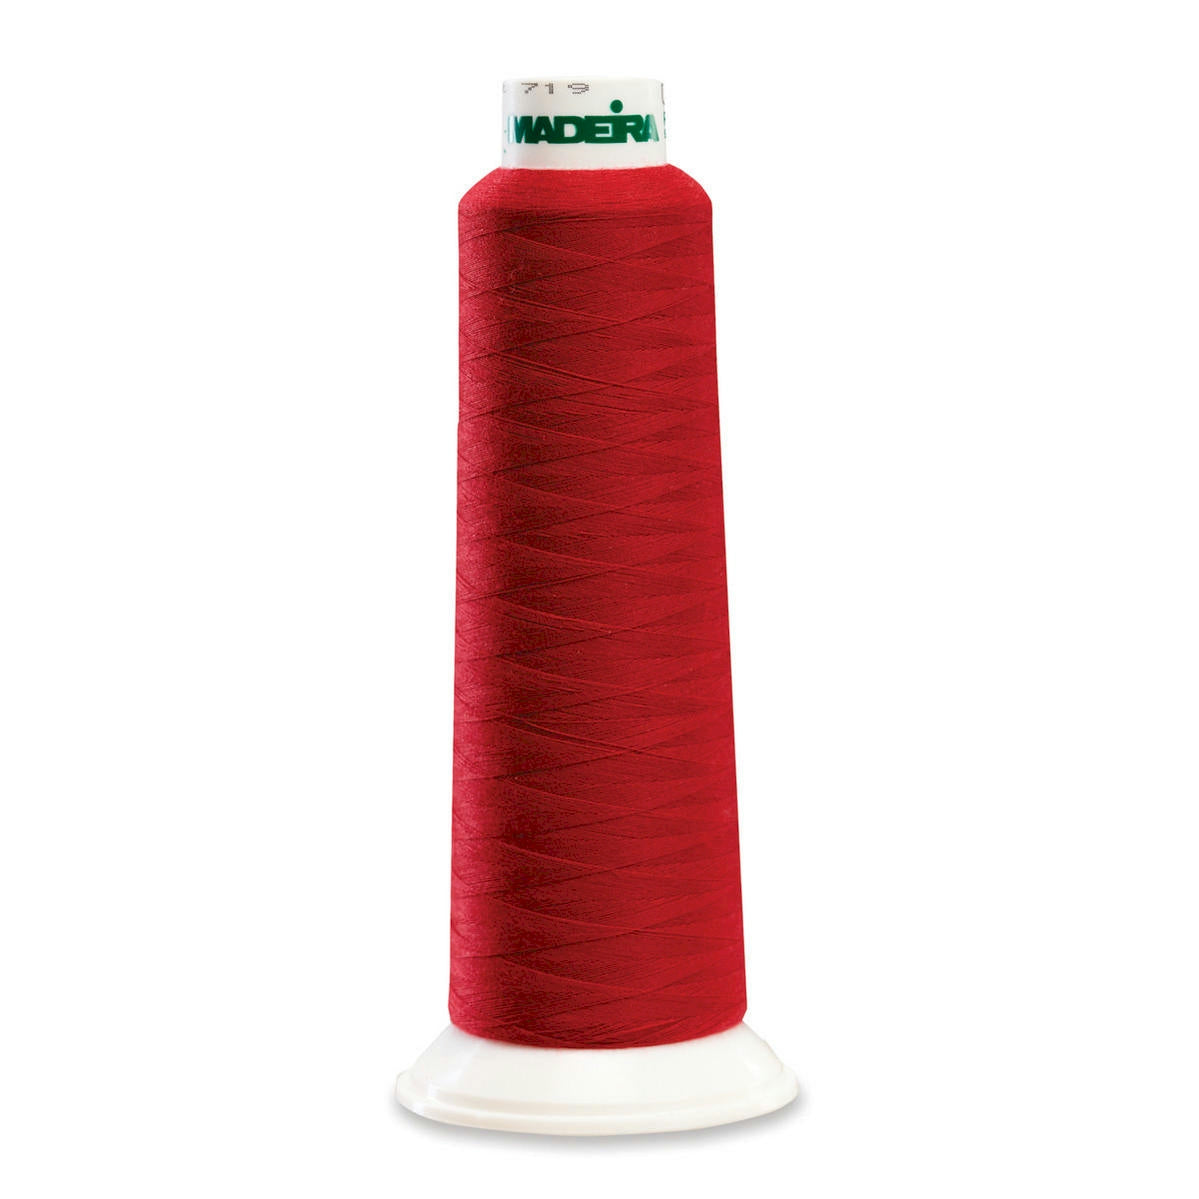 Deep Red Color, Aerolock Premium Serger Thread, Ref. 9470 by Madeira®